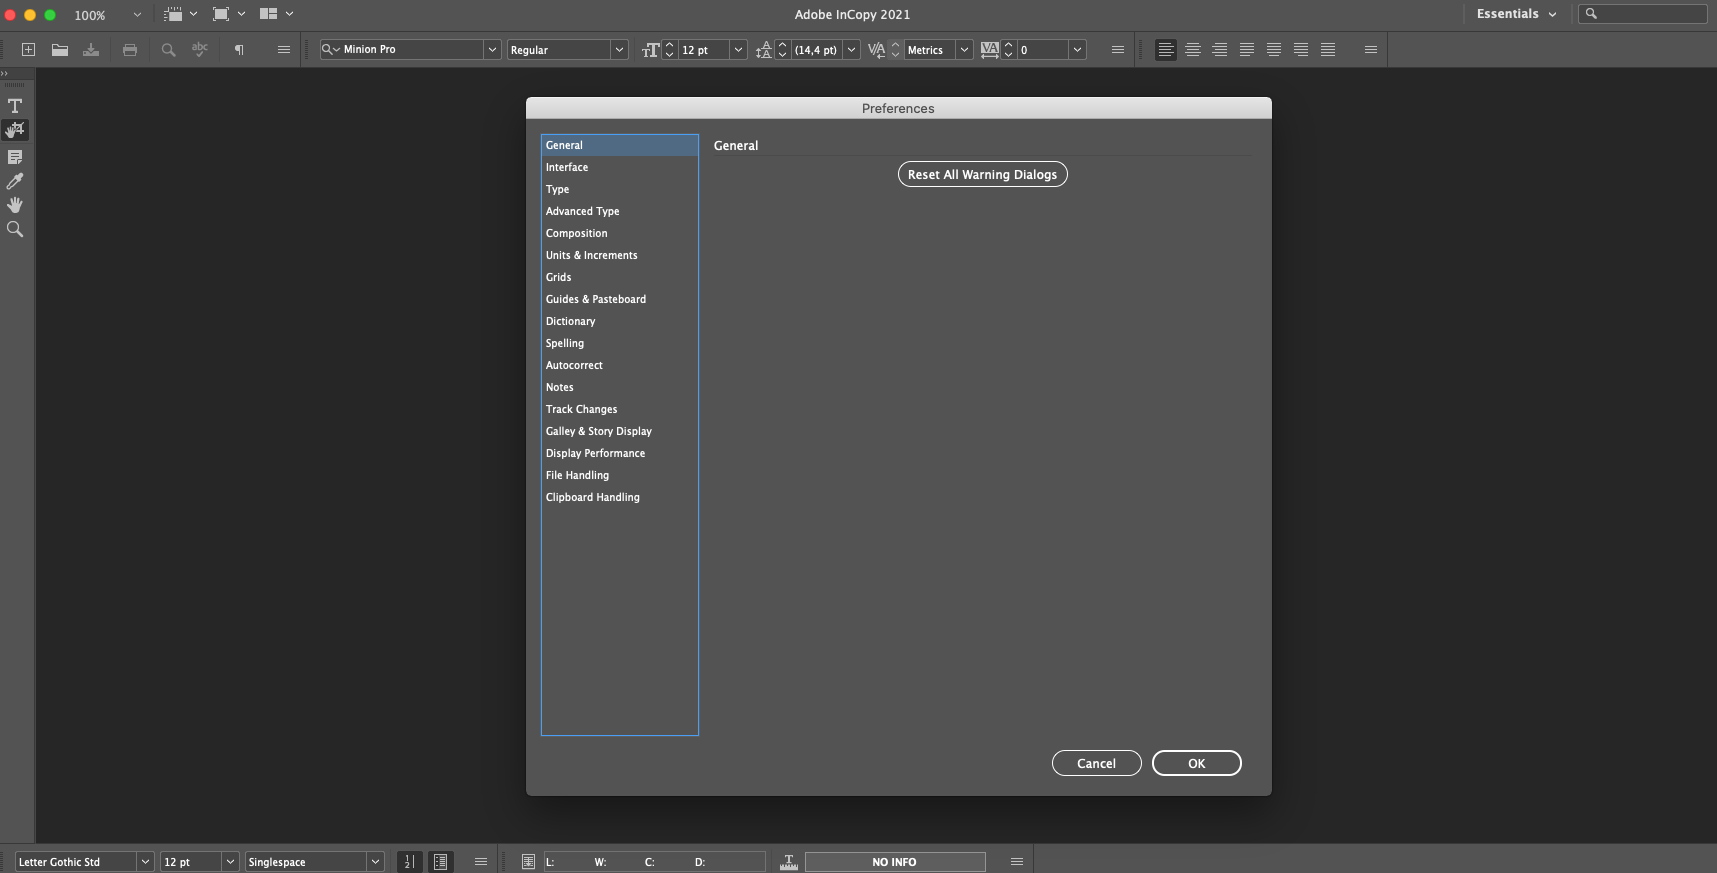 Adobe InCopy 2020 16.2 : Preferences screen